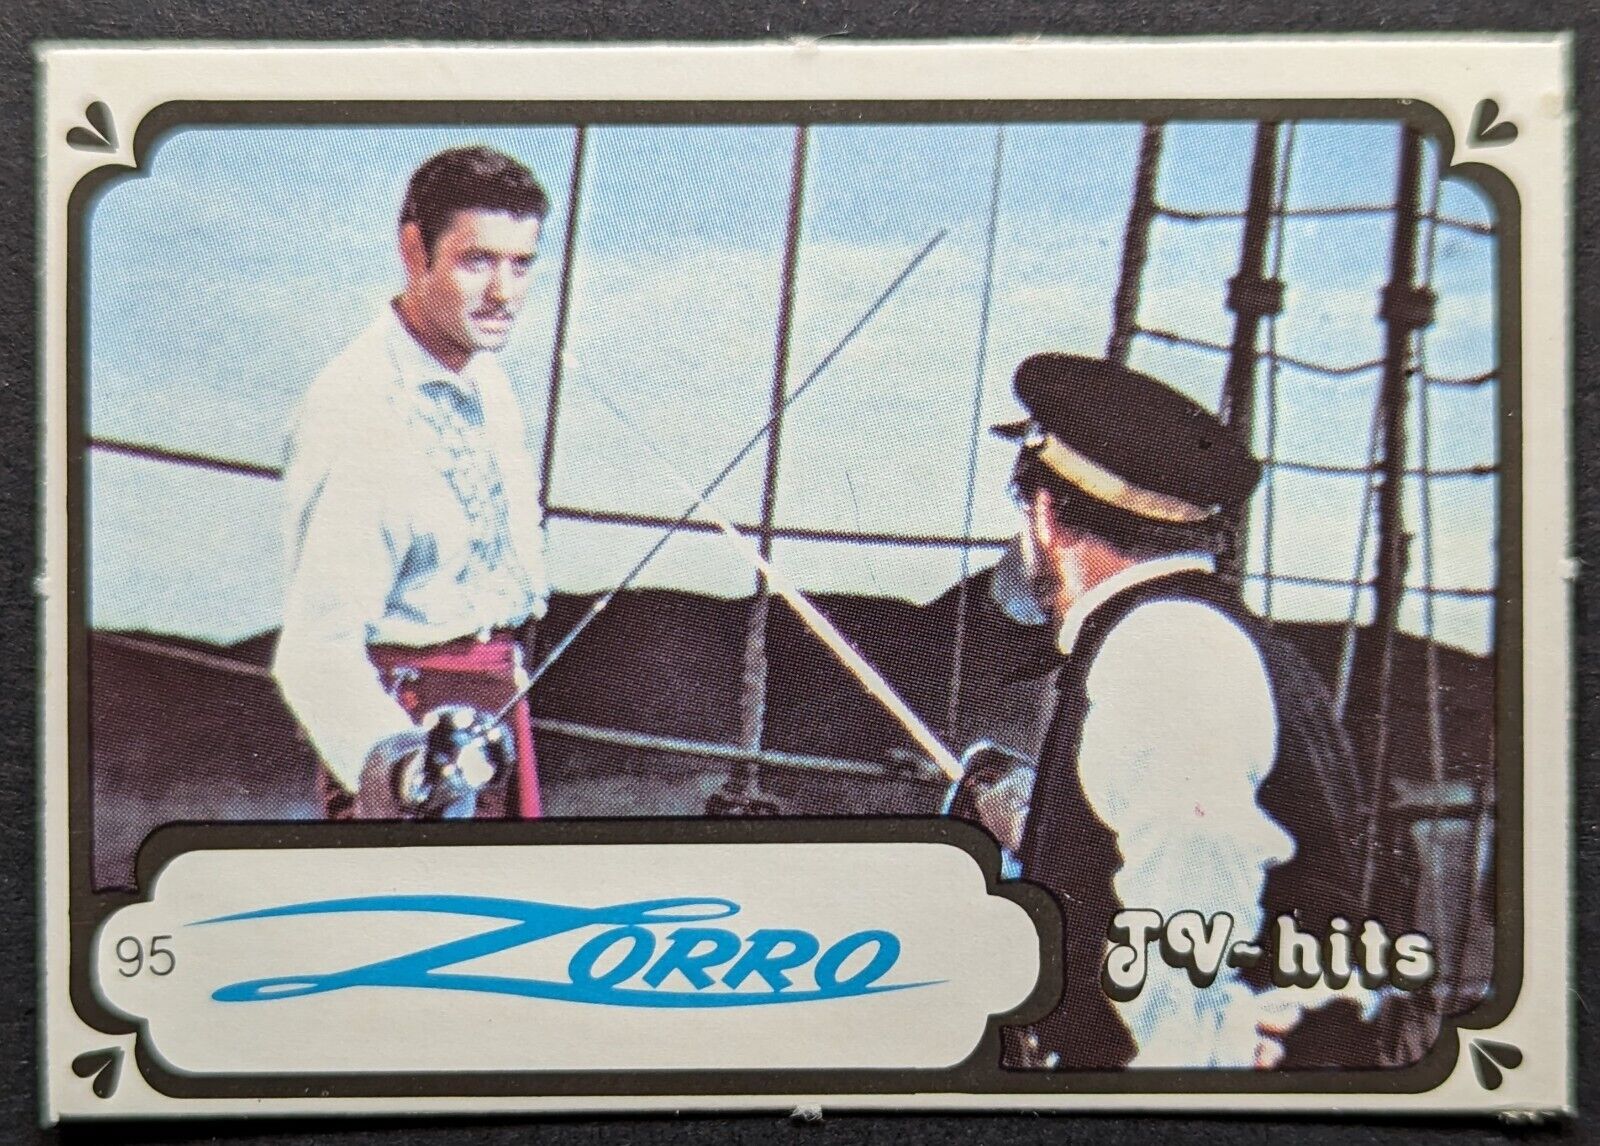 Zorro 1980 Monty Midgee Gum Card #95 (NM)